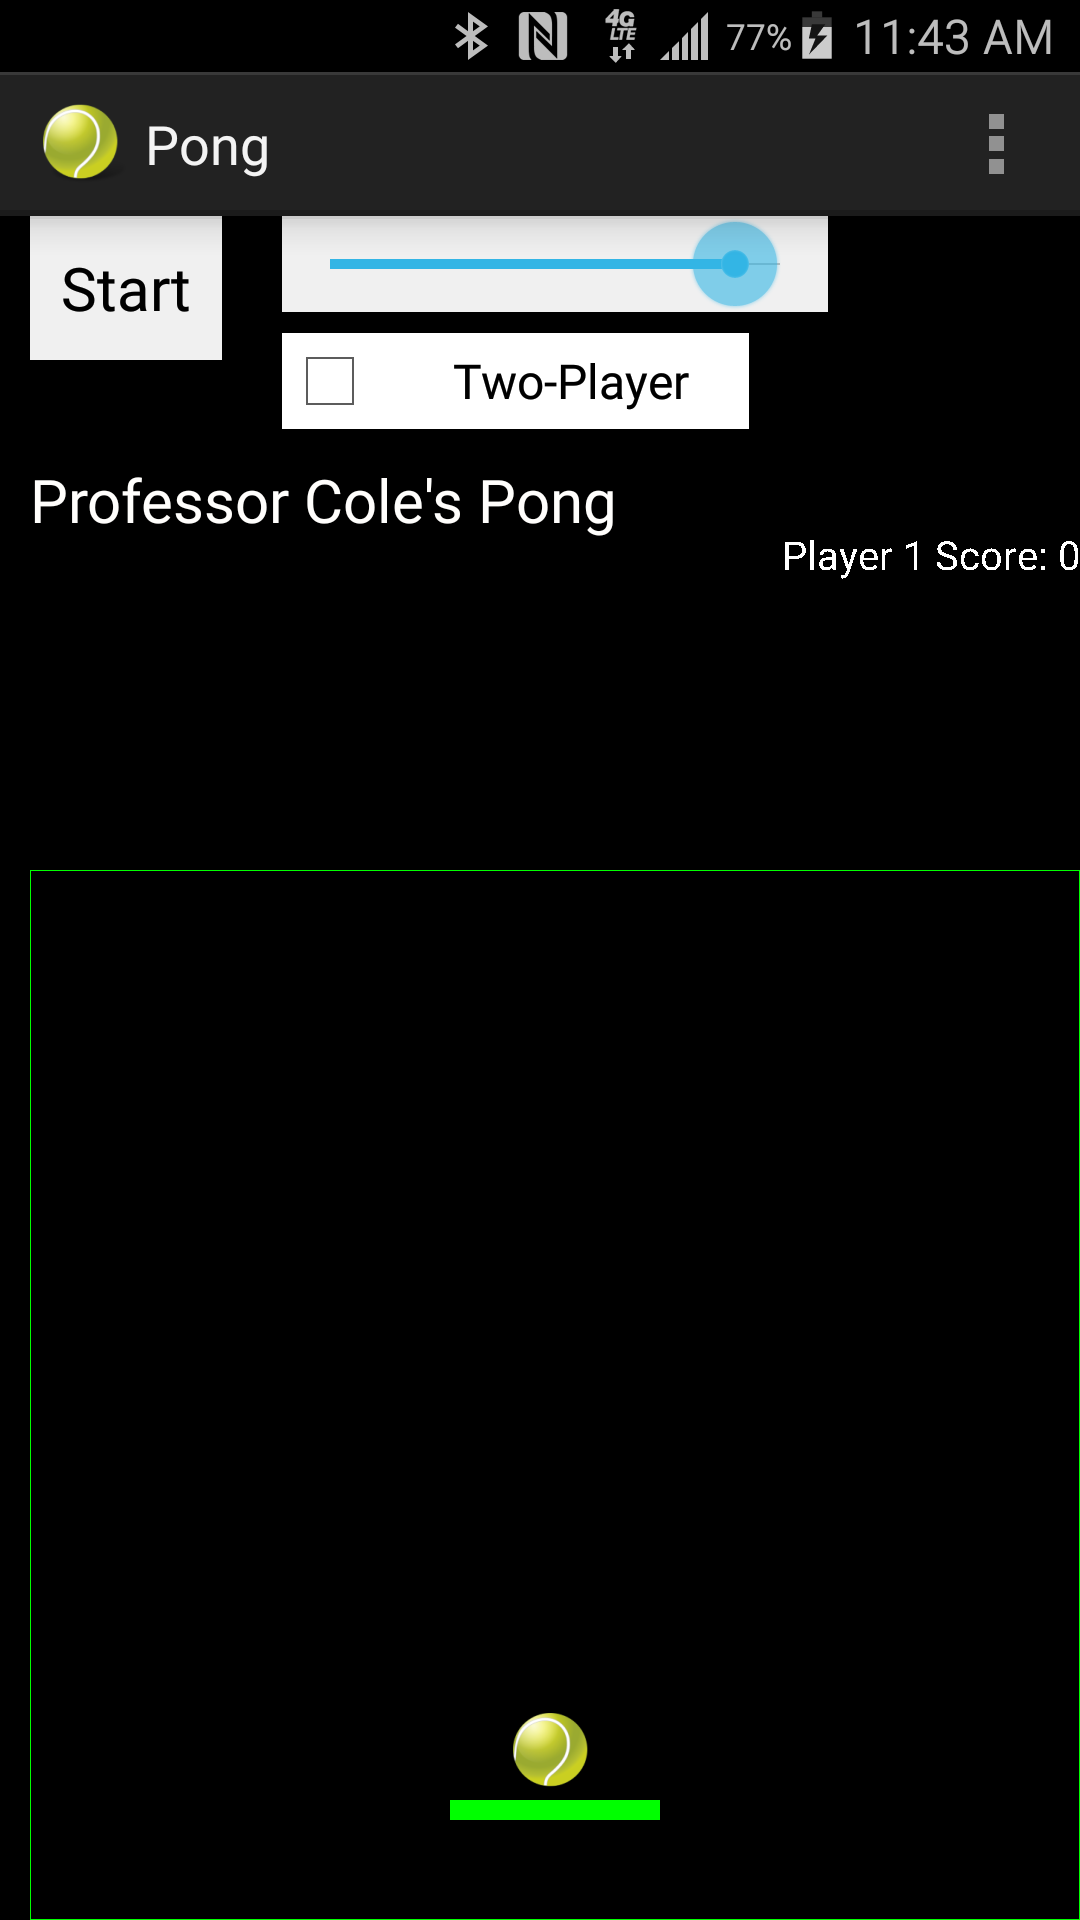 Main Pong screen